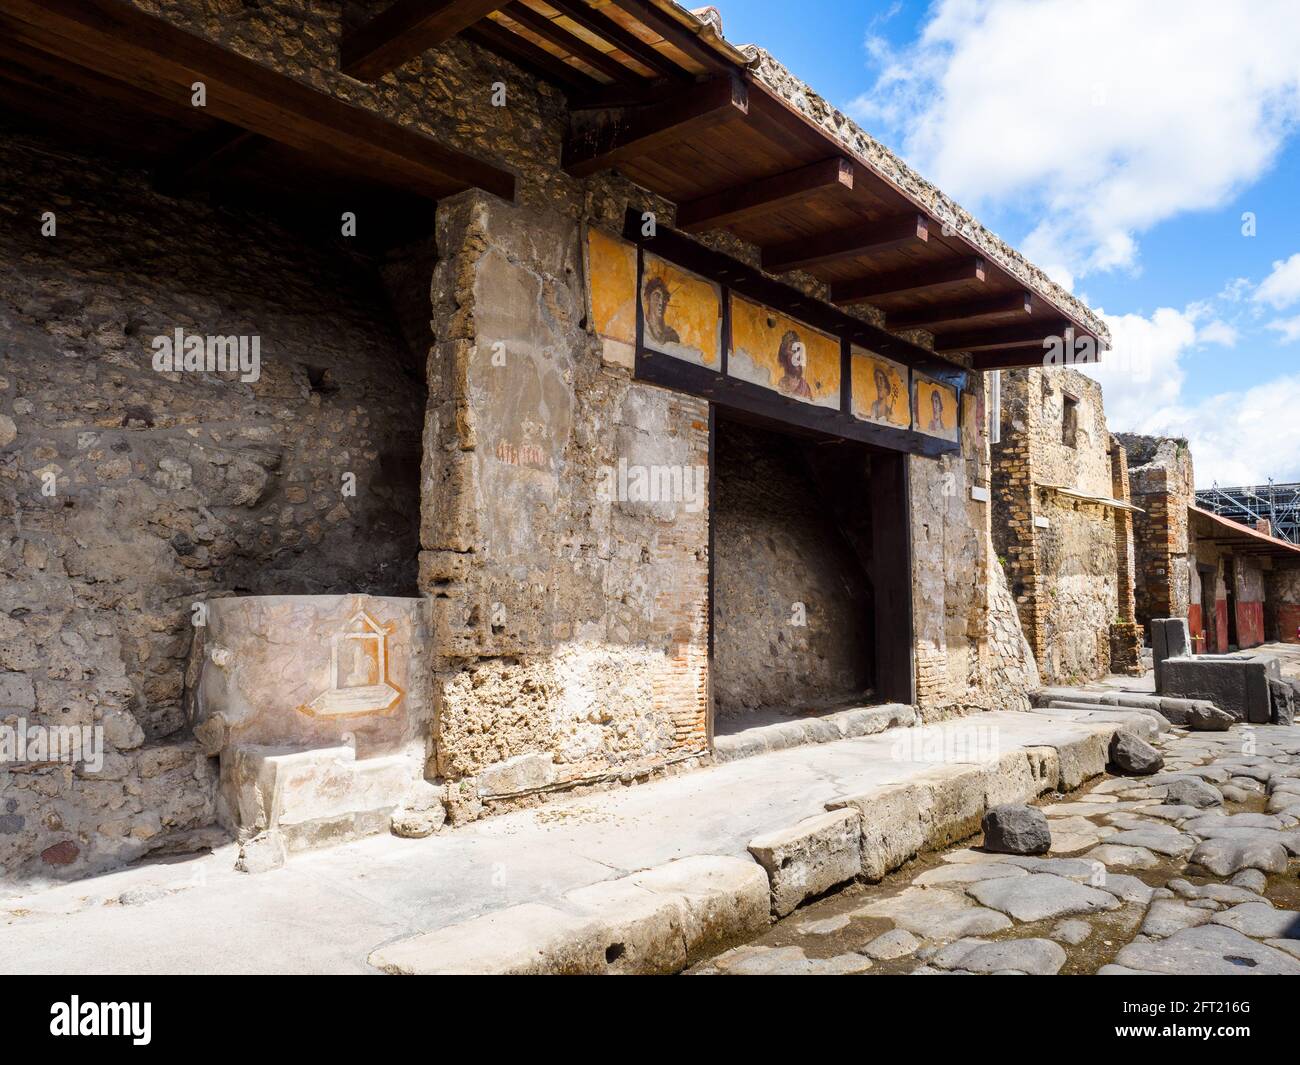 Viale dell'Abbondanza - Pompeii archaeological site, Italy Stock Photo